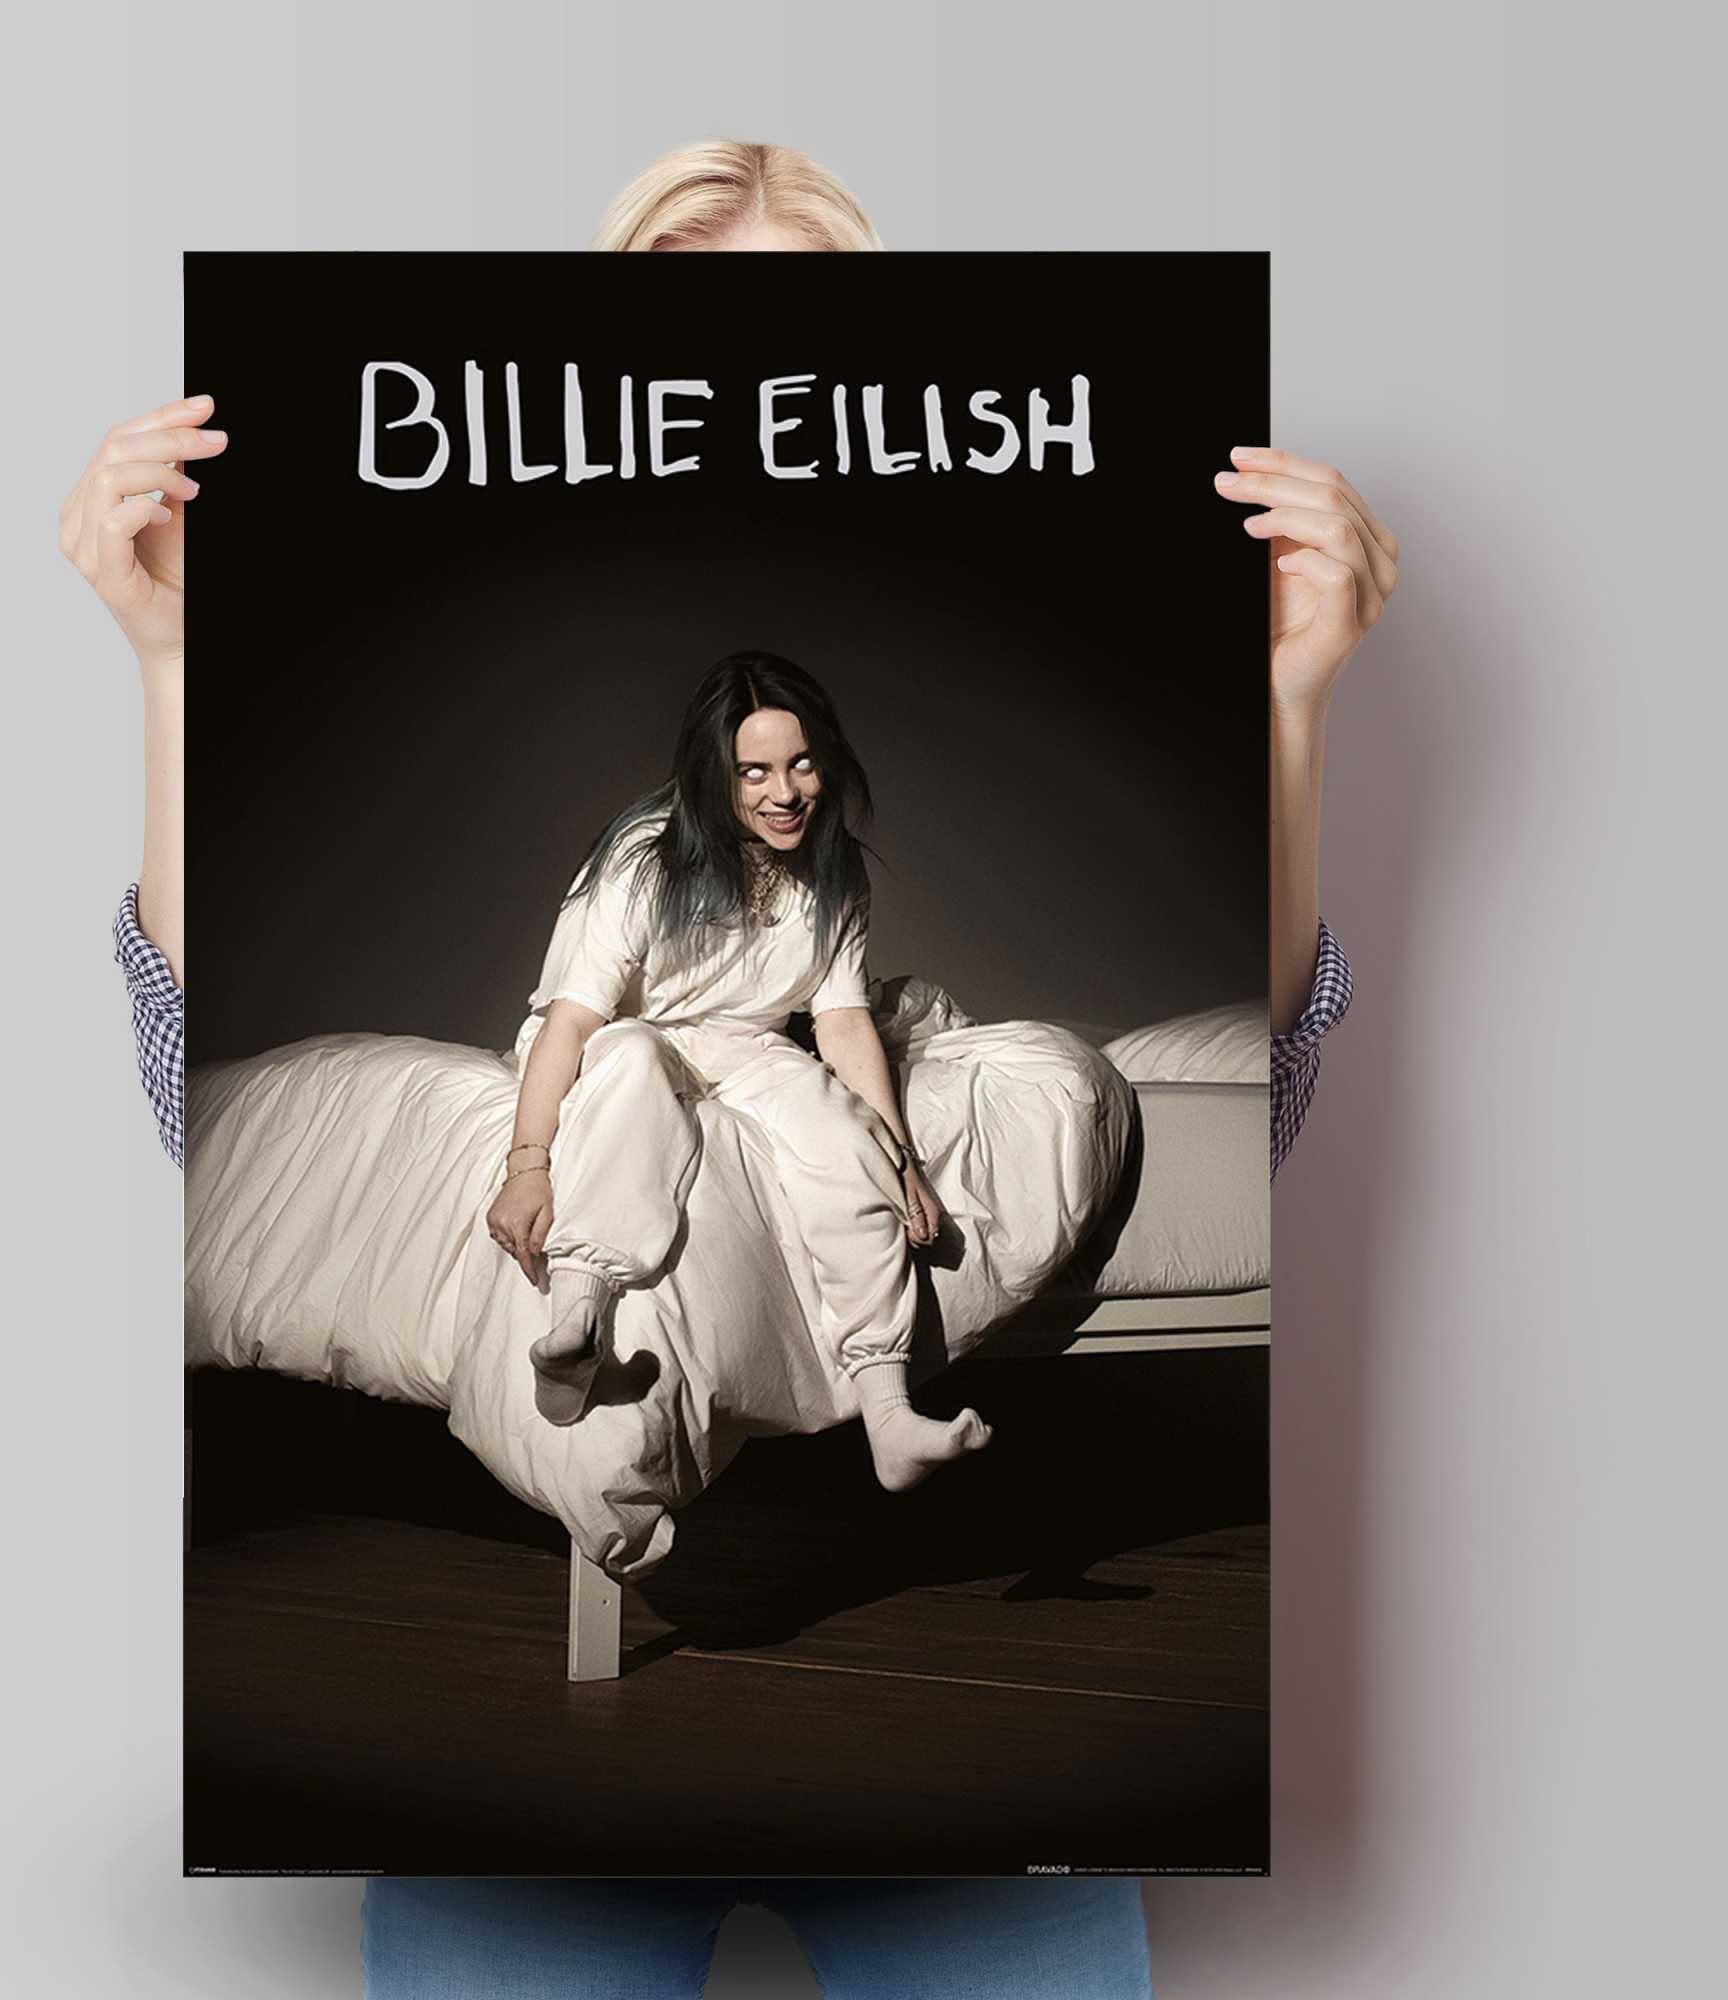 Asleep, Eilish Where (1 Do Billie We Go?, Poster St) Poster Reinders! Menschen We Fall All When